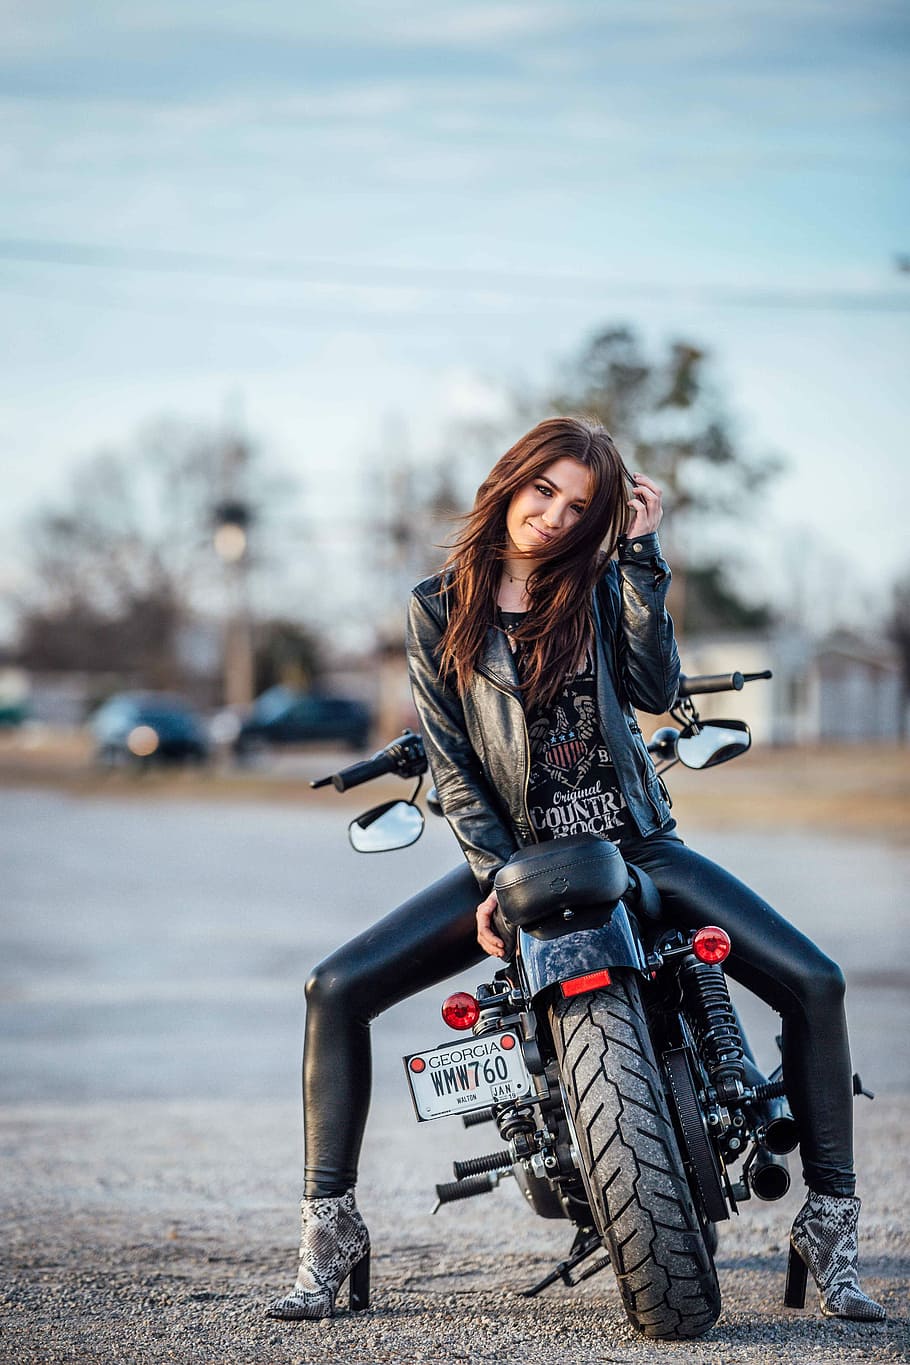 HD wallpaper: woman sitting on black motorcycle, bike, backwards